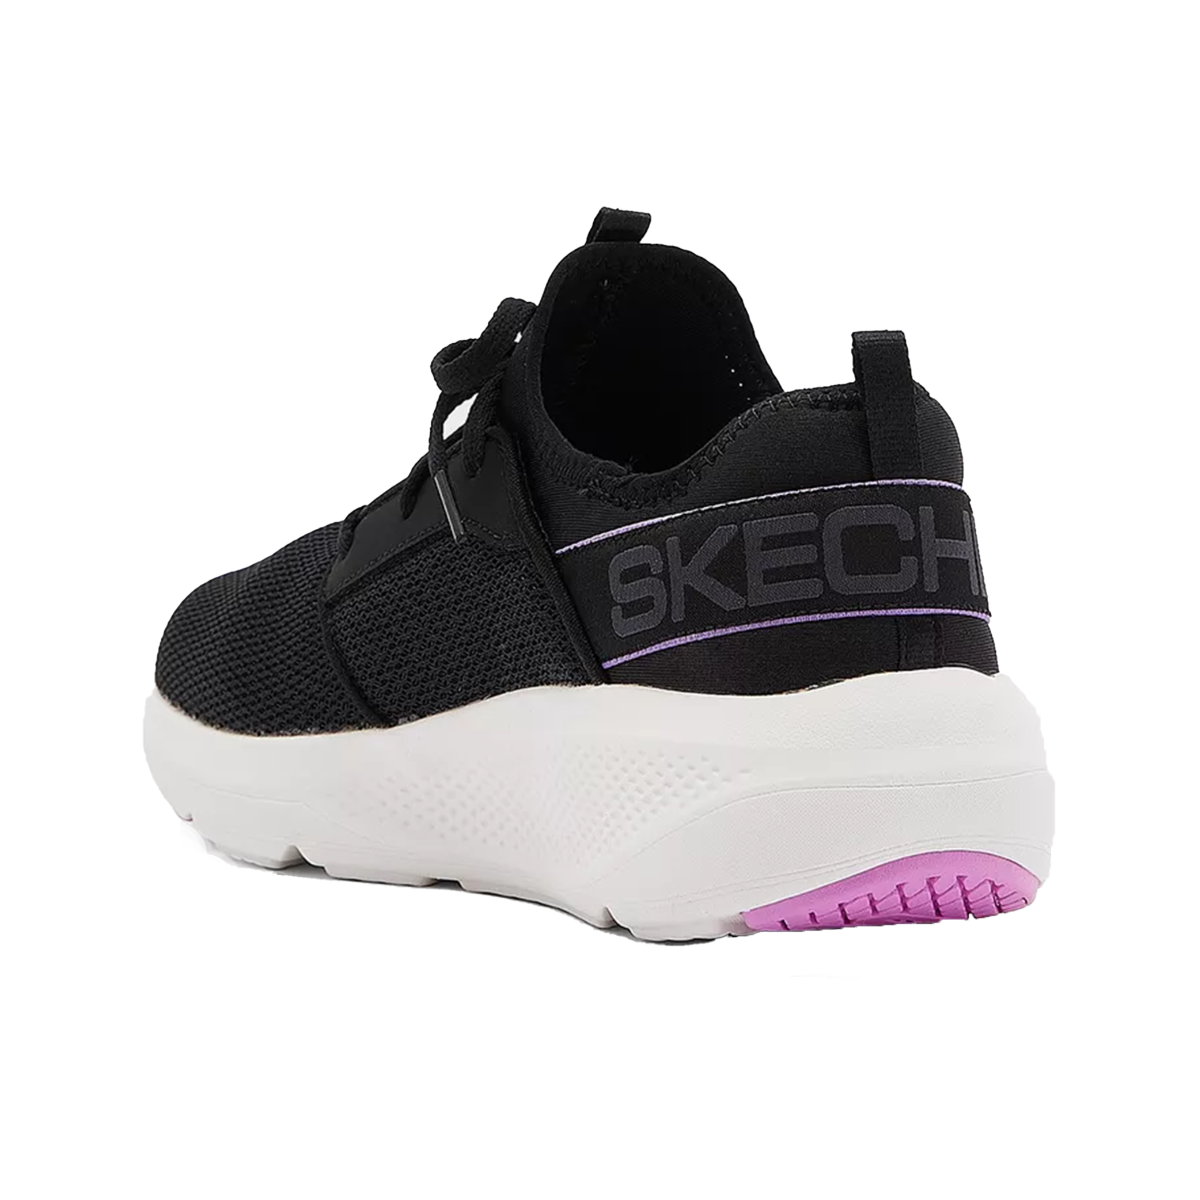 Skechers Go Run Elevate Shoes For Women, Black & Purple